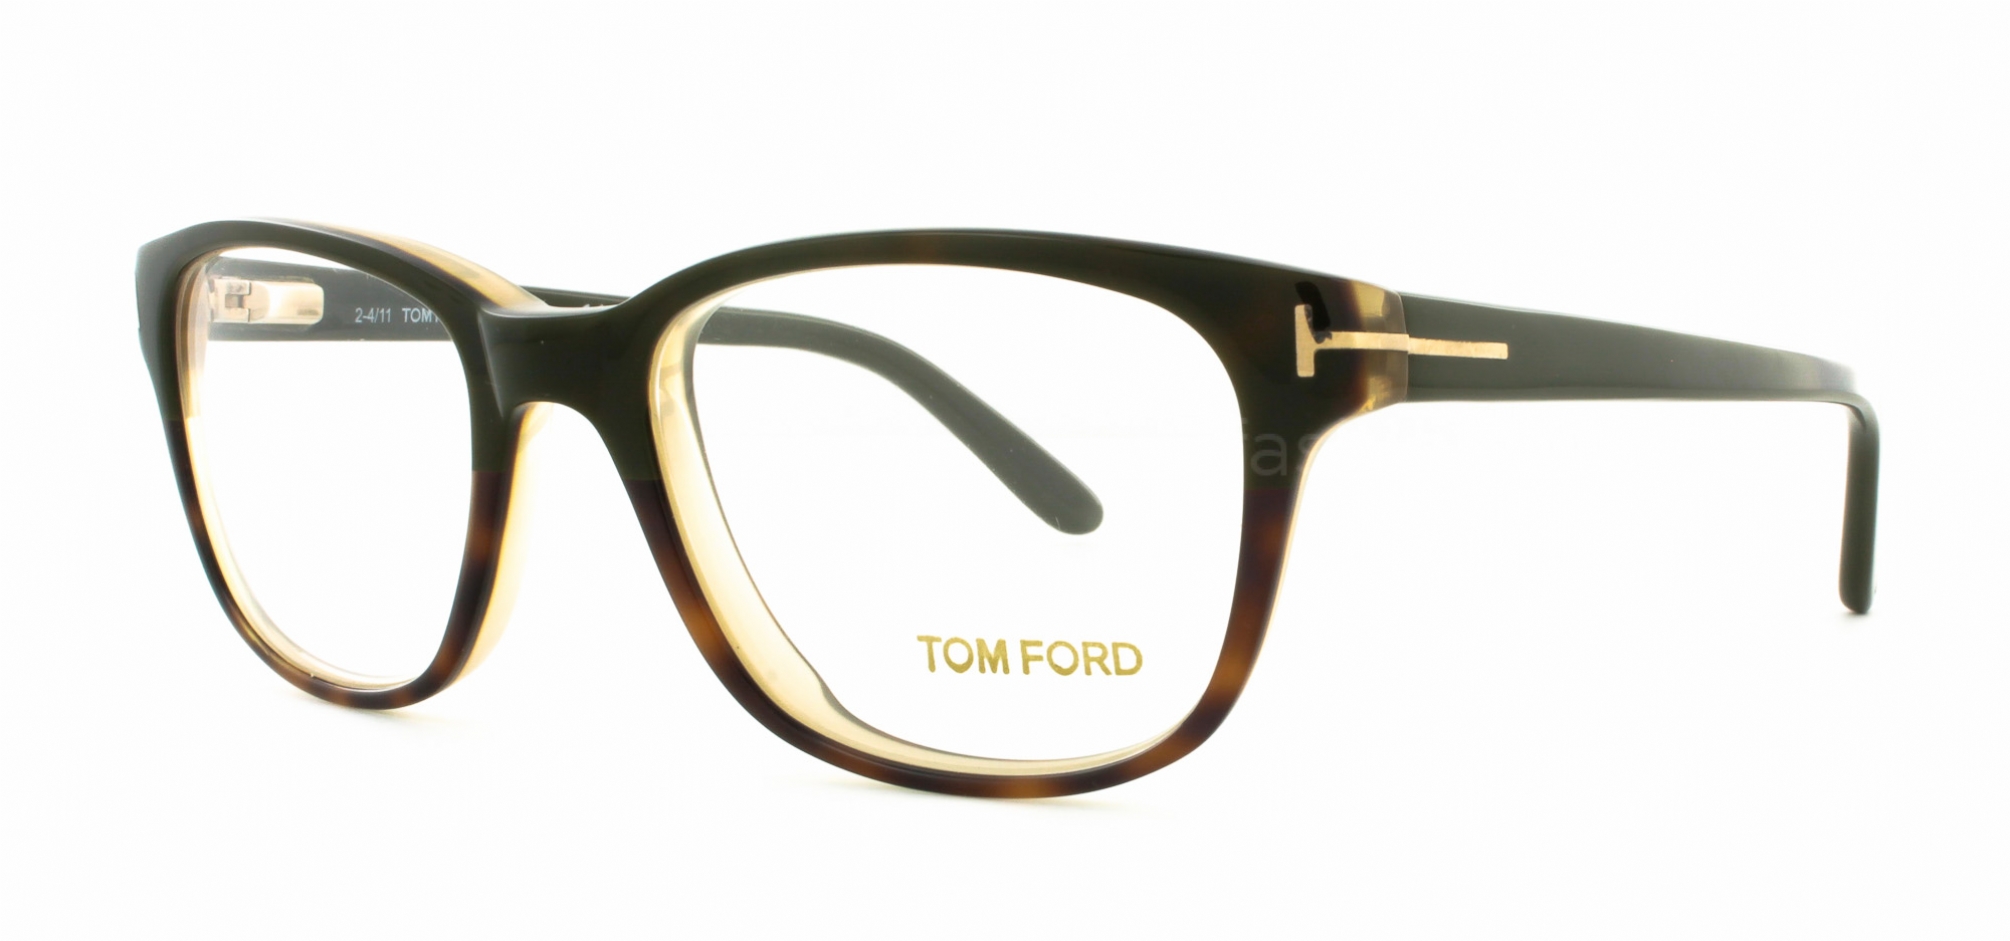 Tom Ford 5196 Eyeglasses